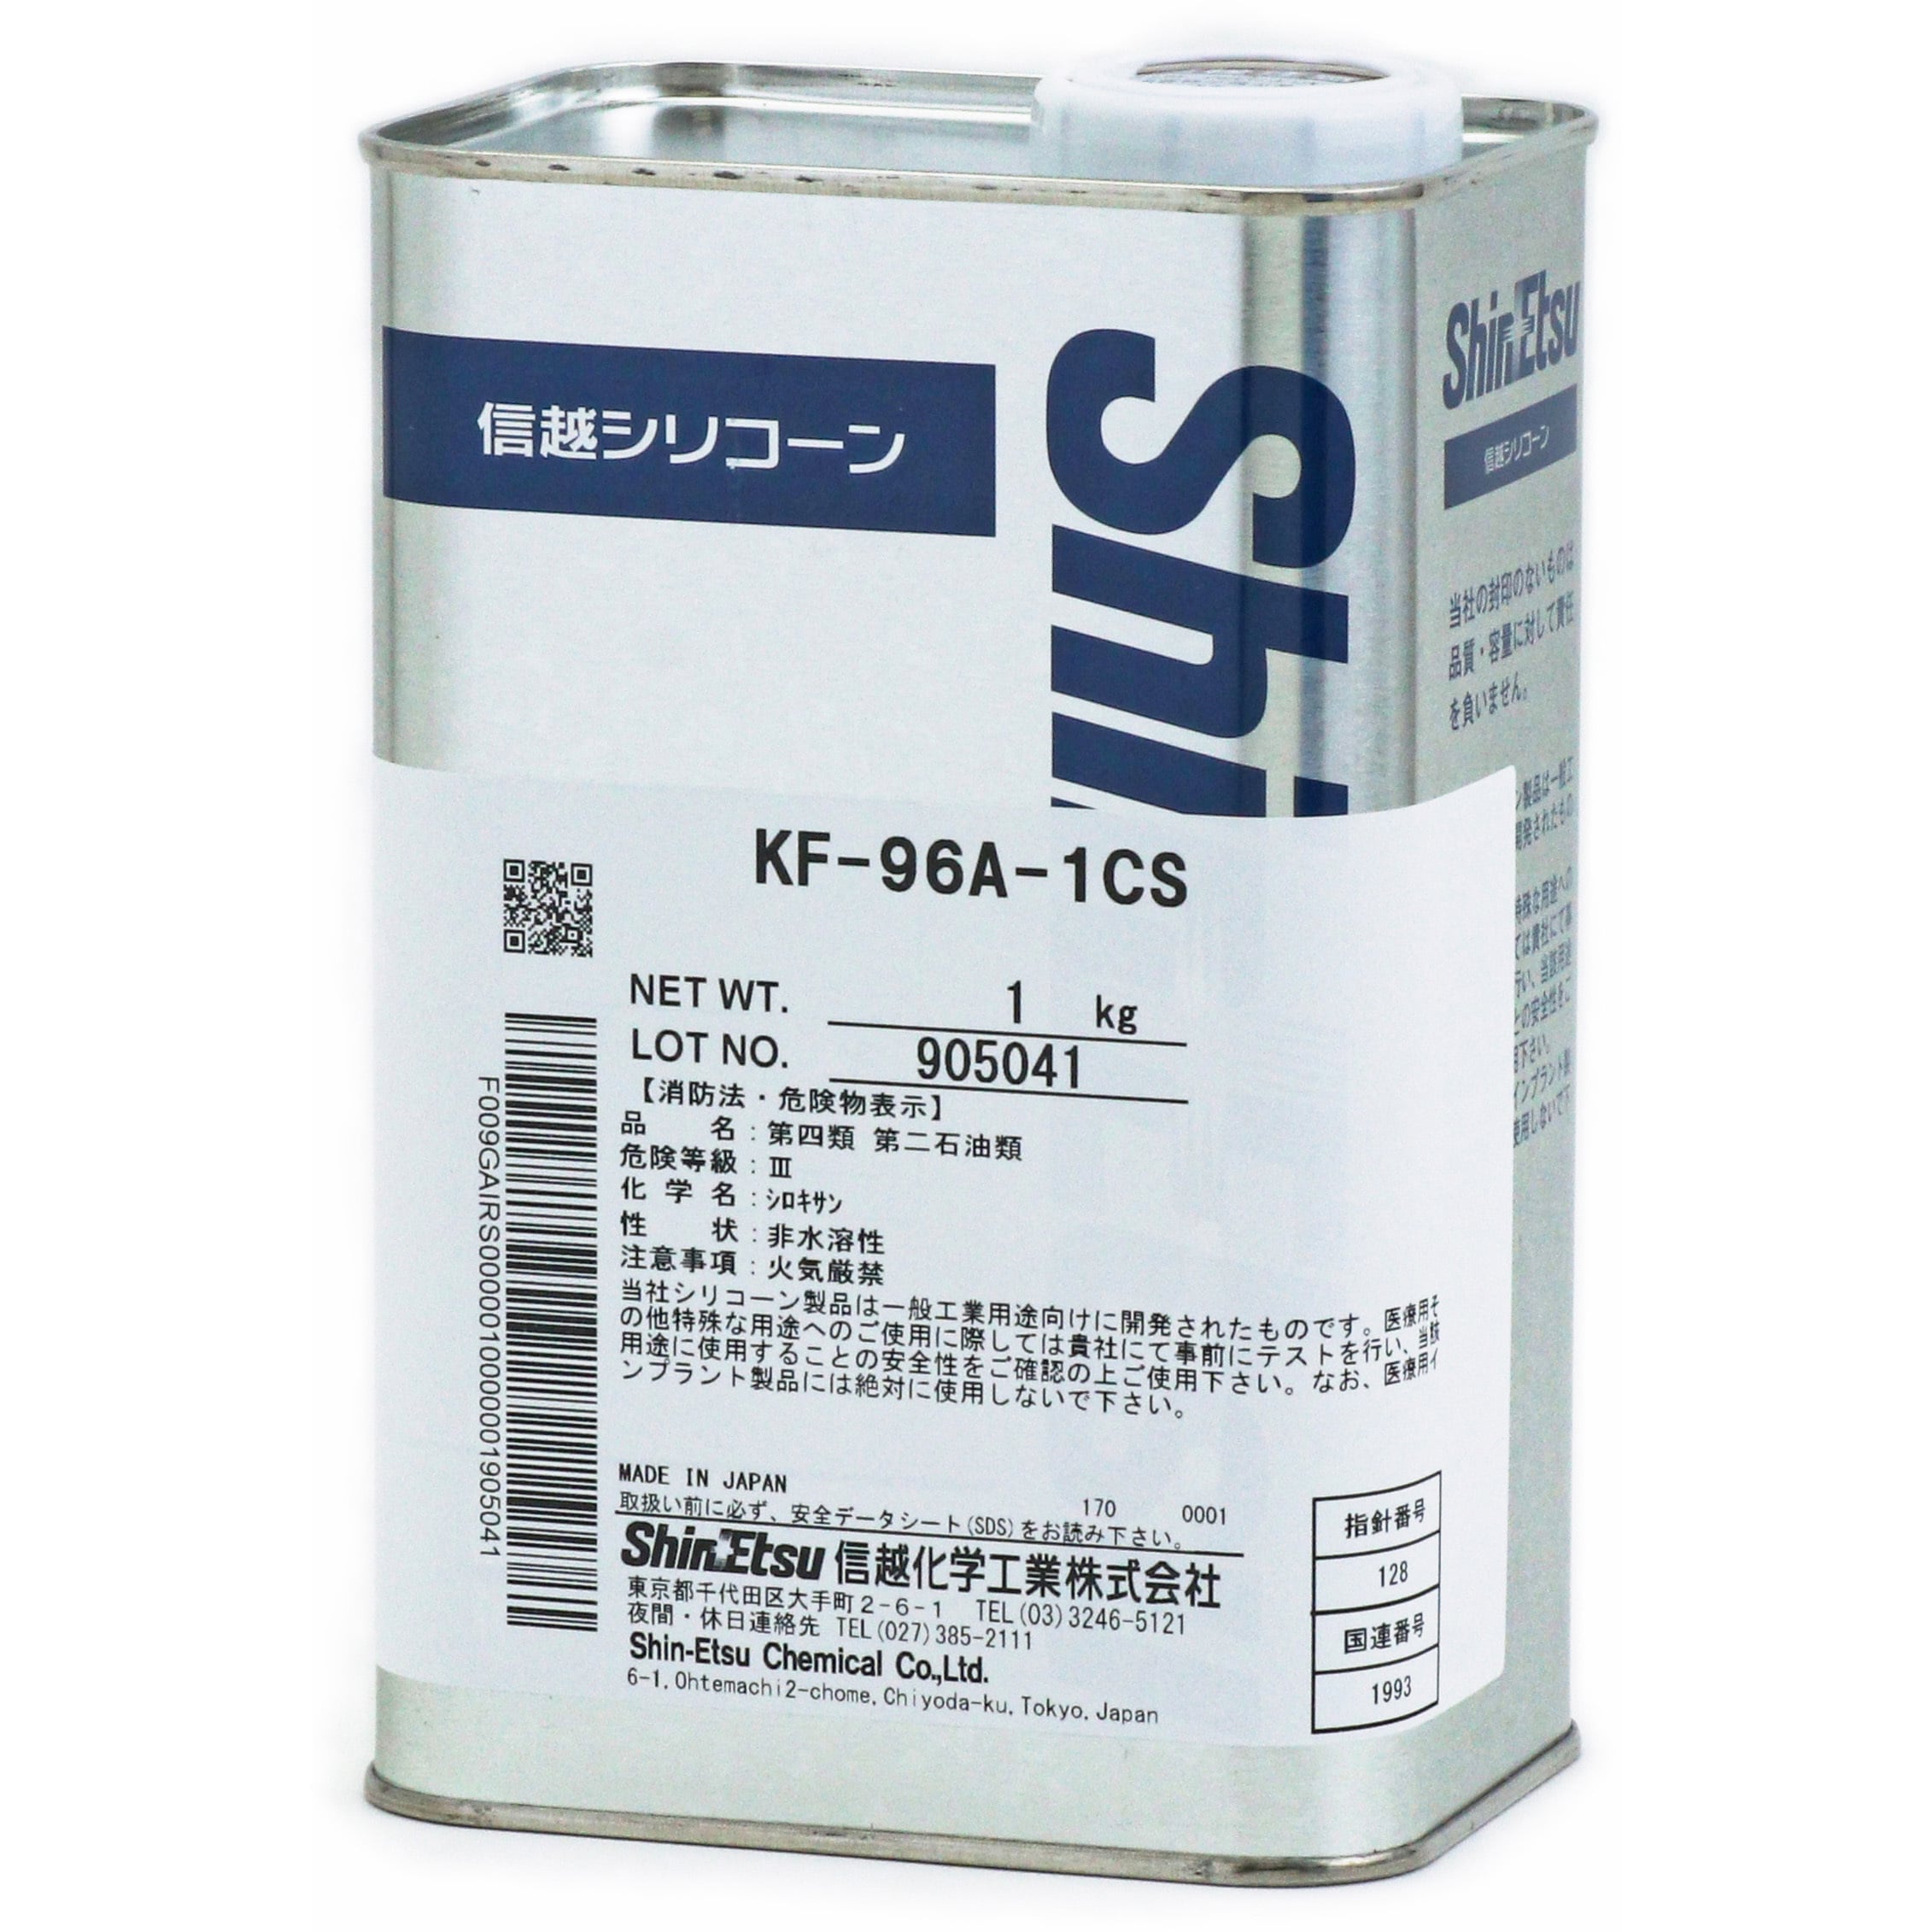 KF-96A-1CS 化粧品用シリコーンオイル KF96A 1缶(1kg) 信越化学工業